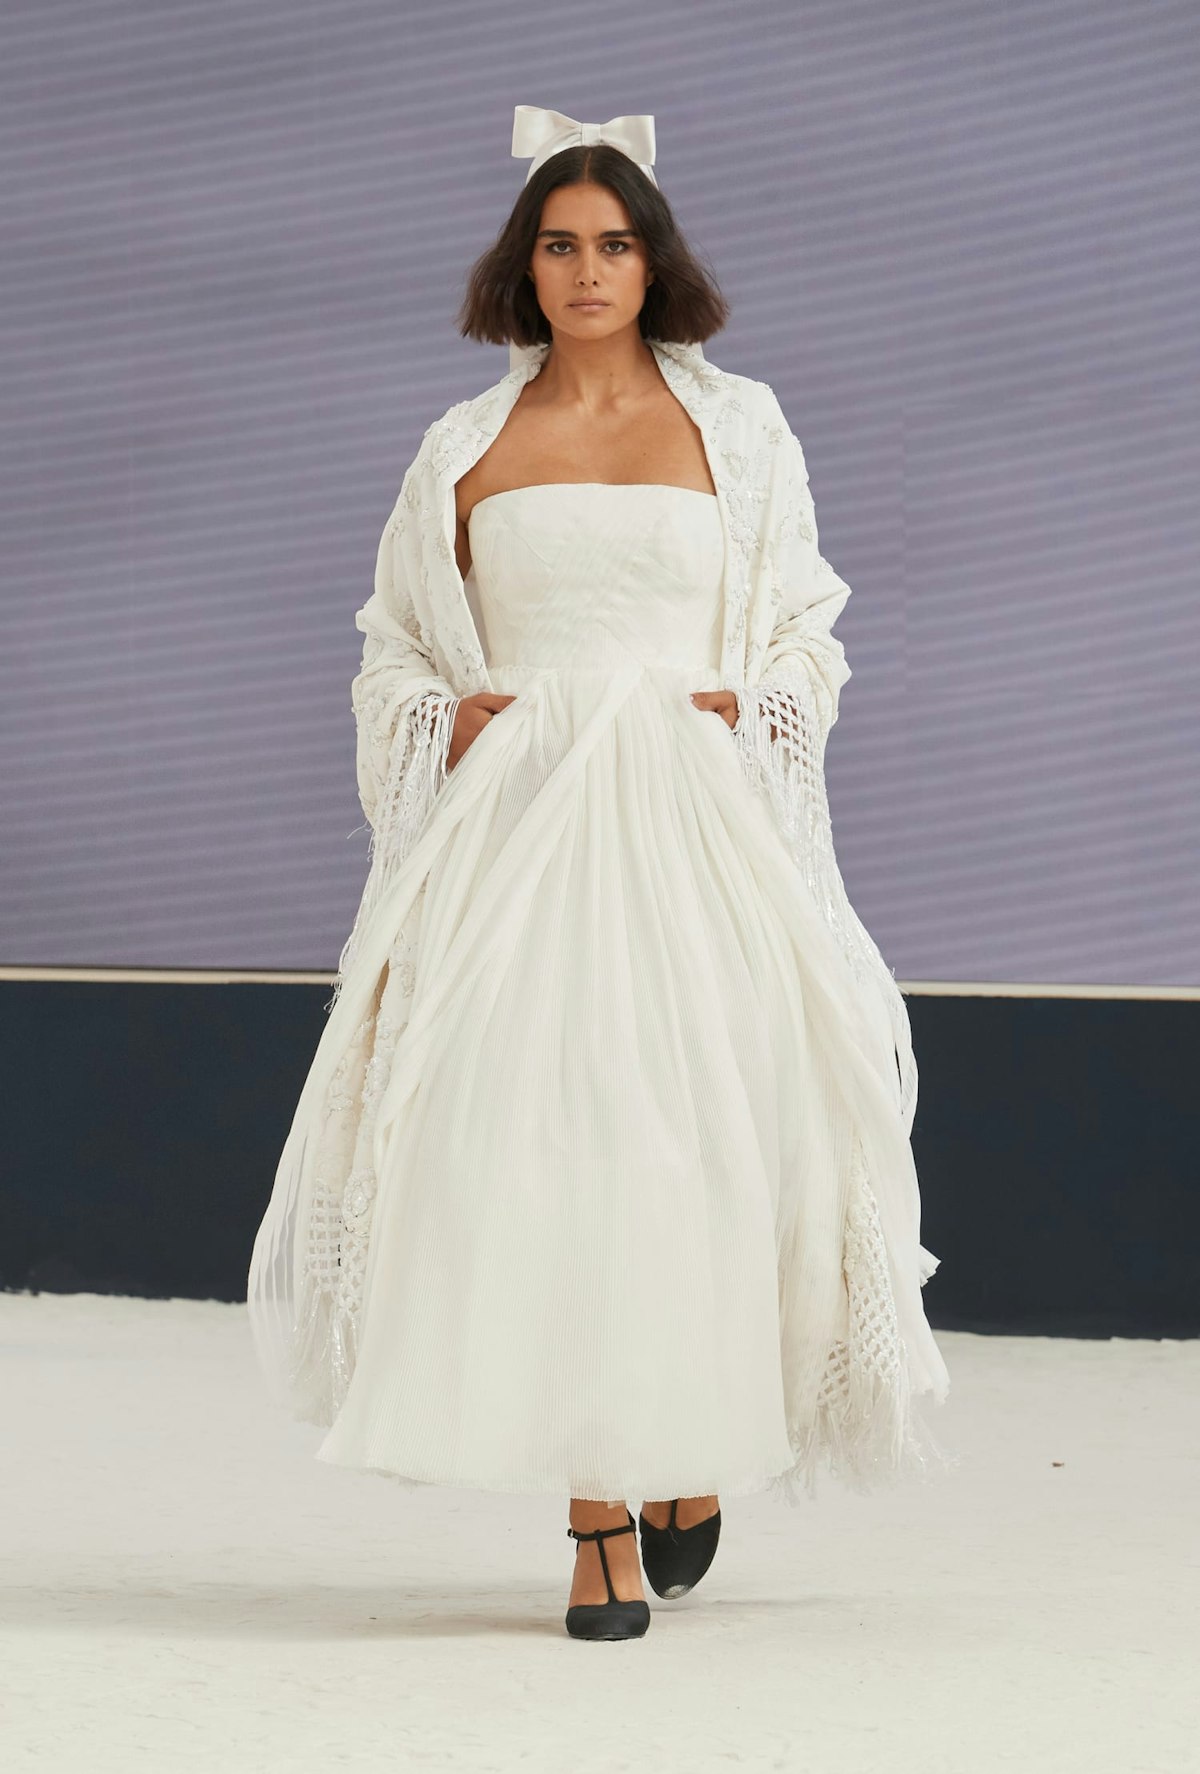 Chanel's Most Iconic Wedding Dresses — Wedding Season Bridal Gowns